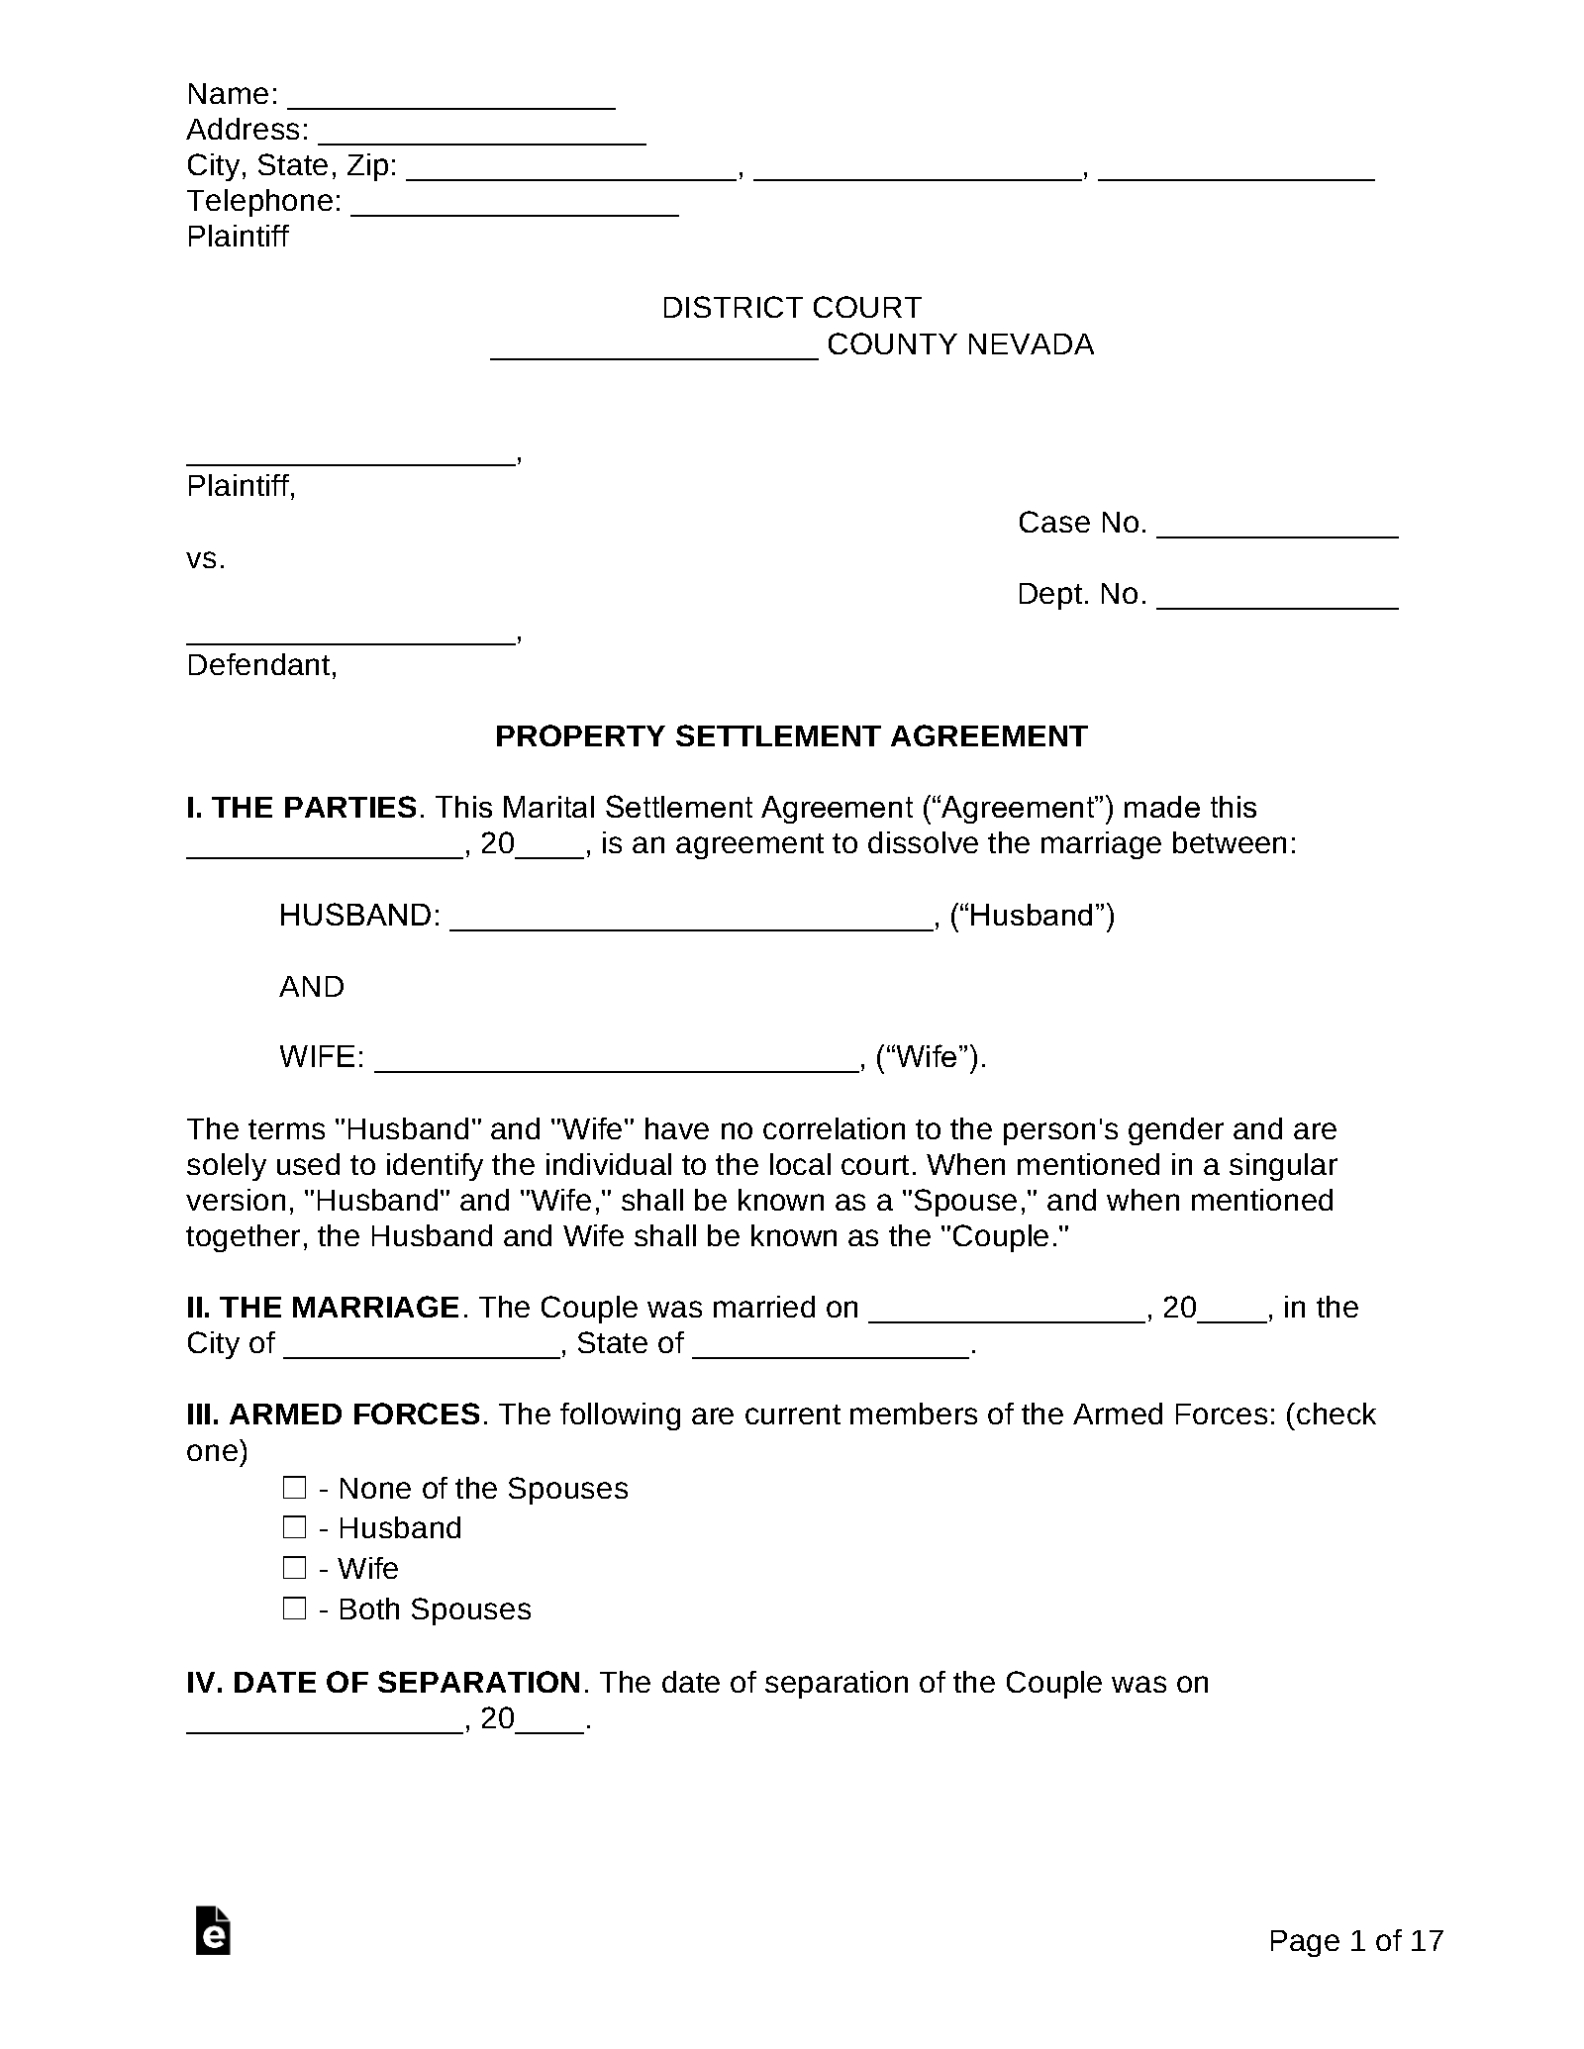 Free Nevada Marital Settlement Agreement - Pdf | Word | Eforms Intended For Property Settlement Agreement Sample